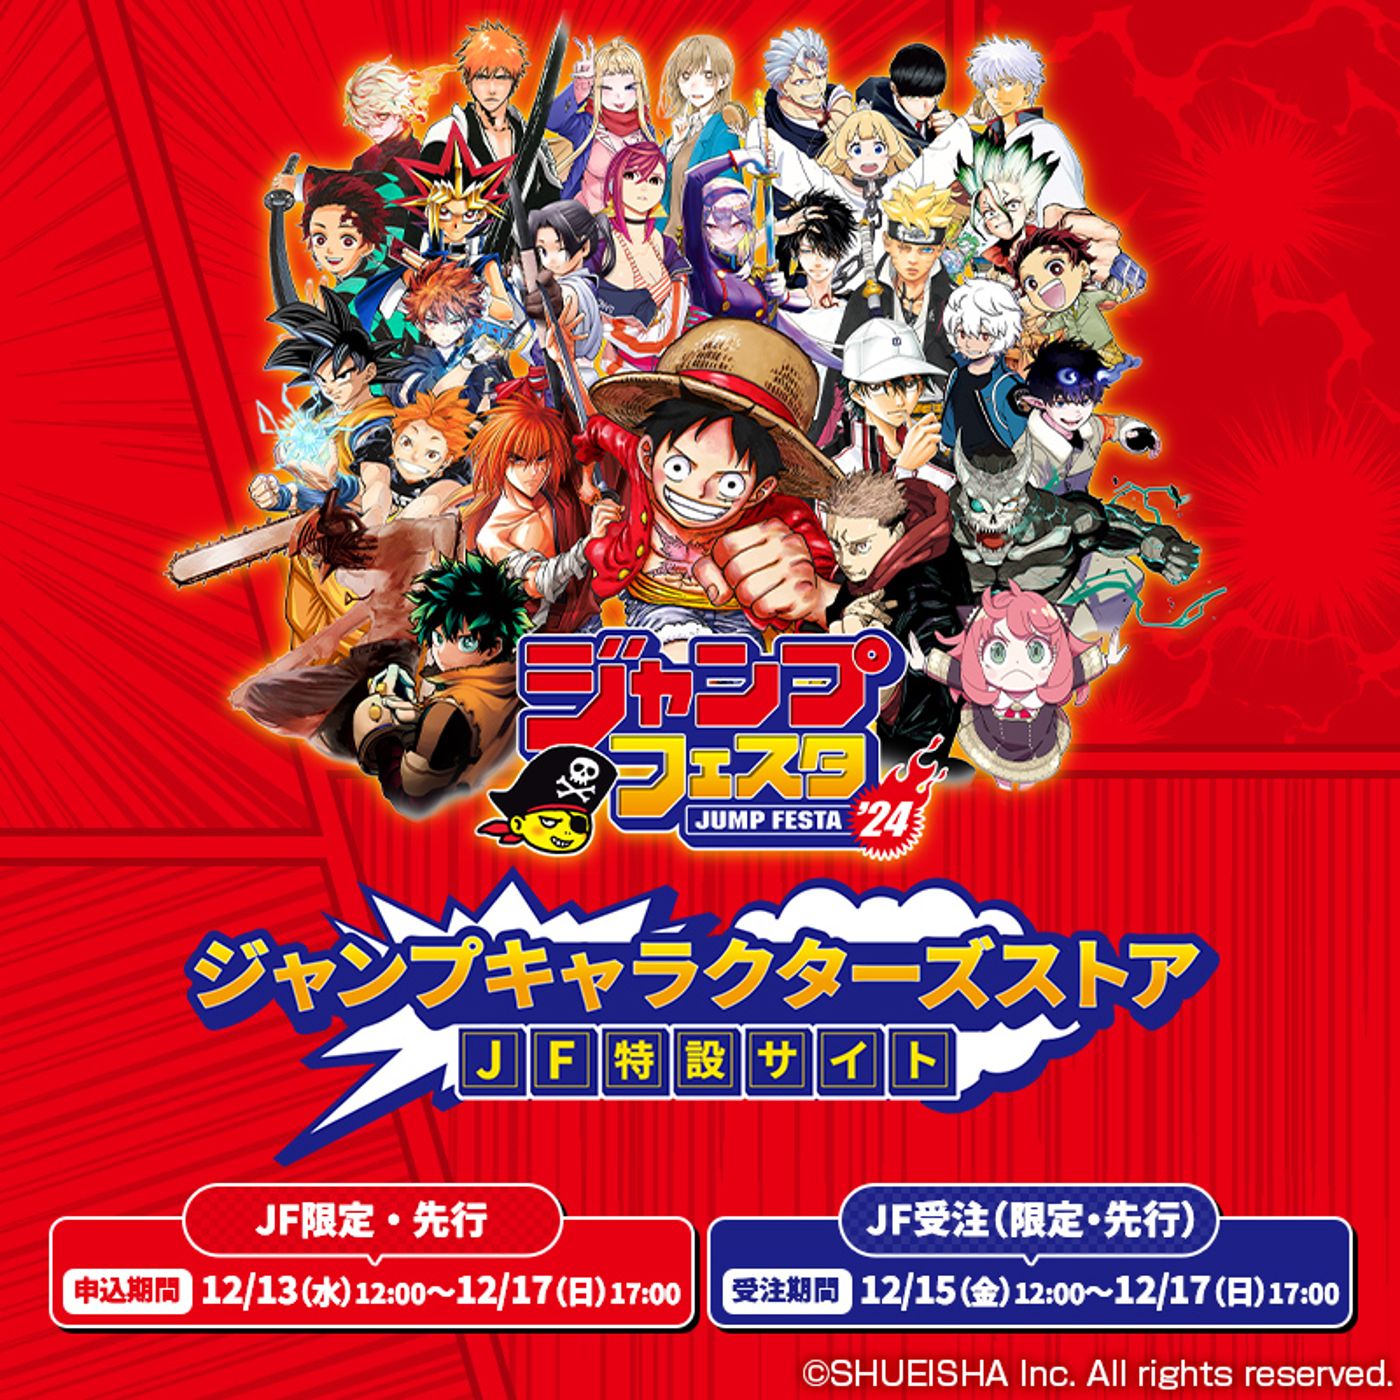 Shonen Jump’s Big Event Will Stream Internationally In English